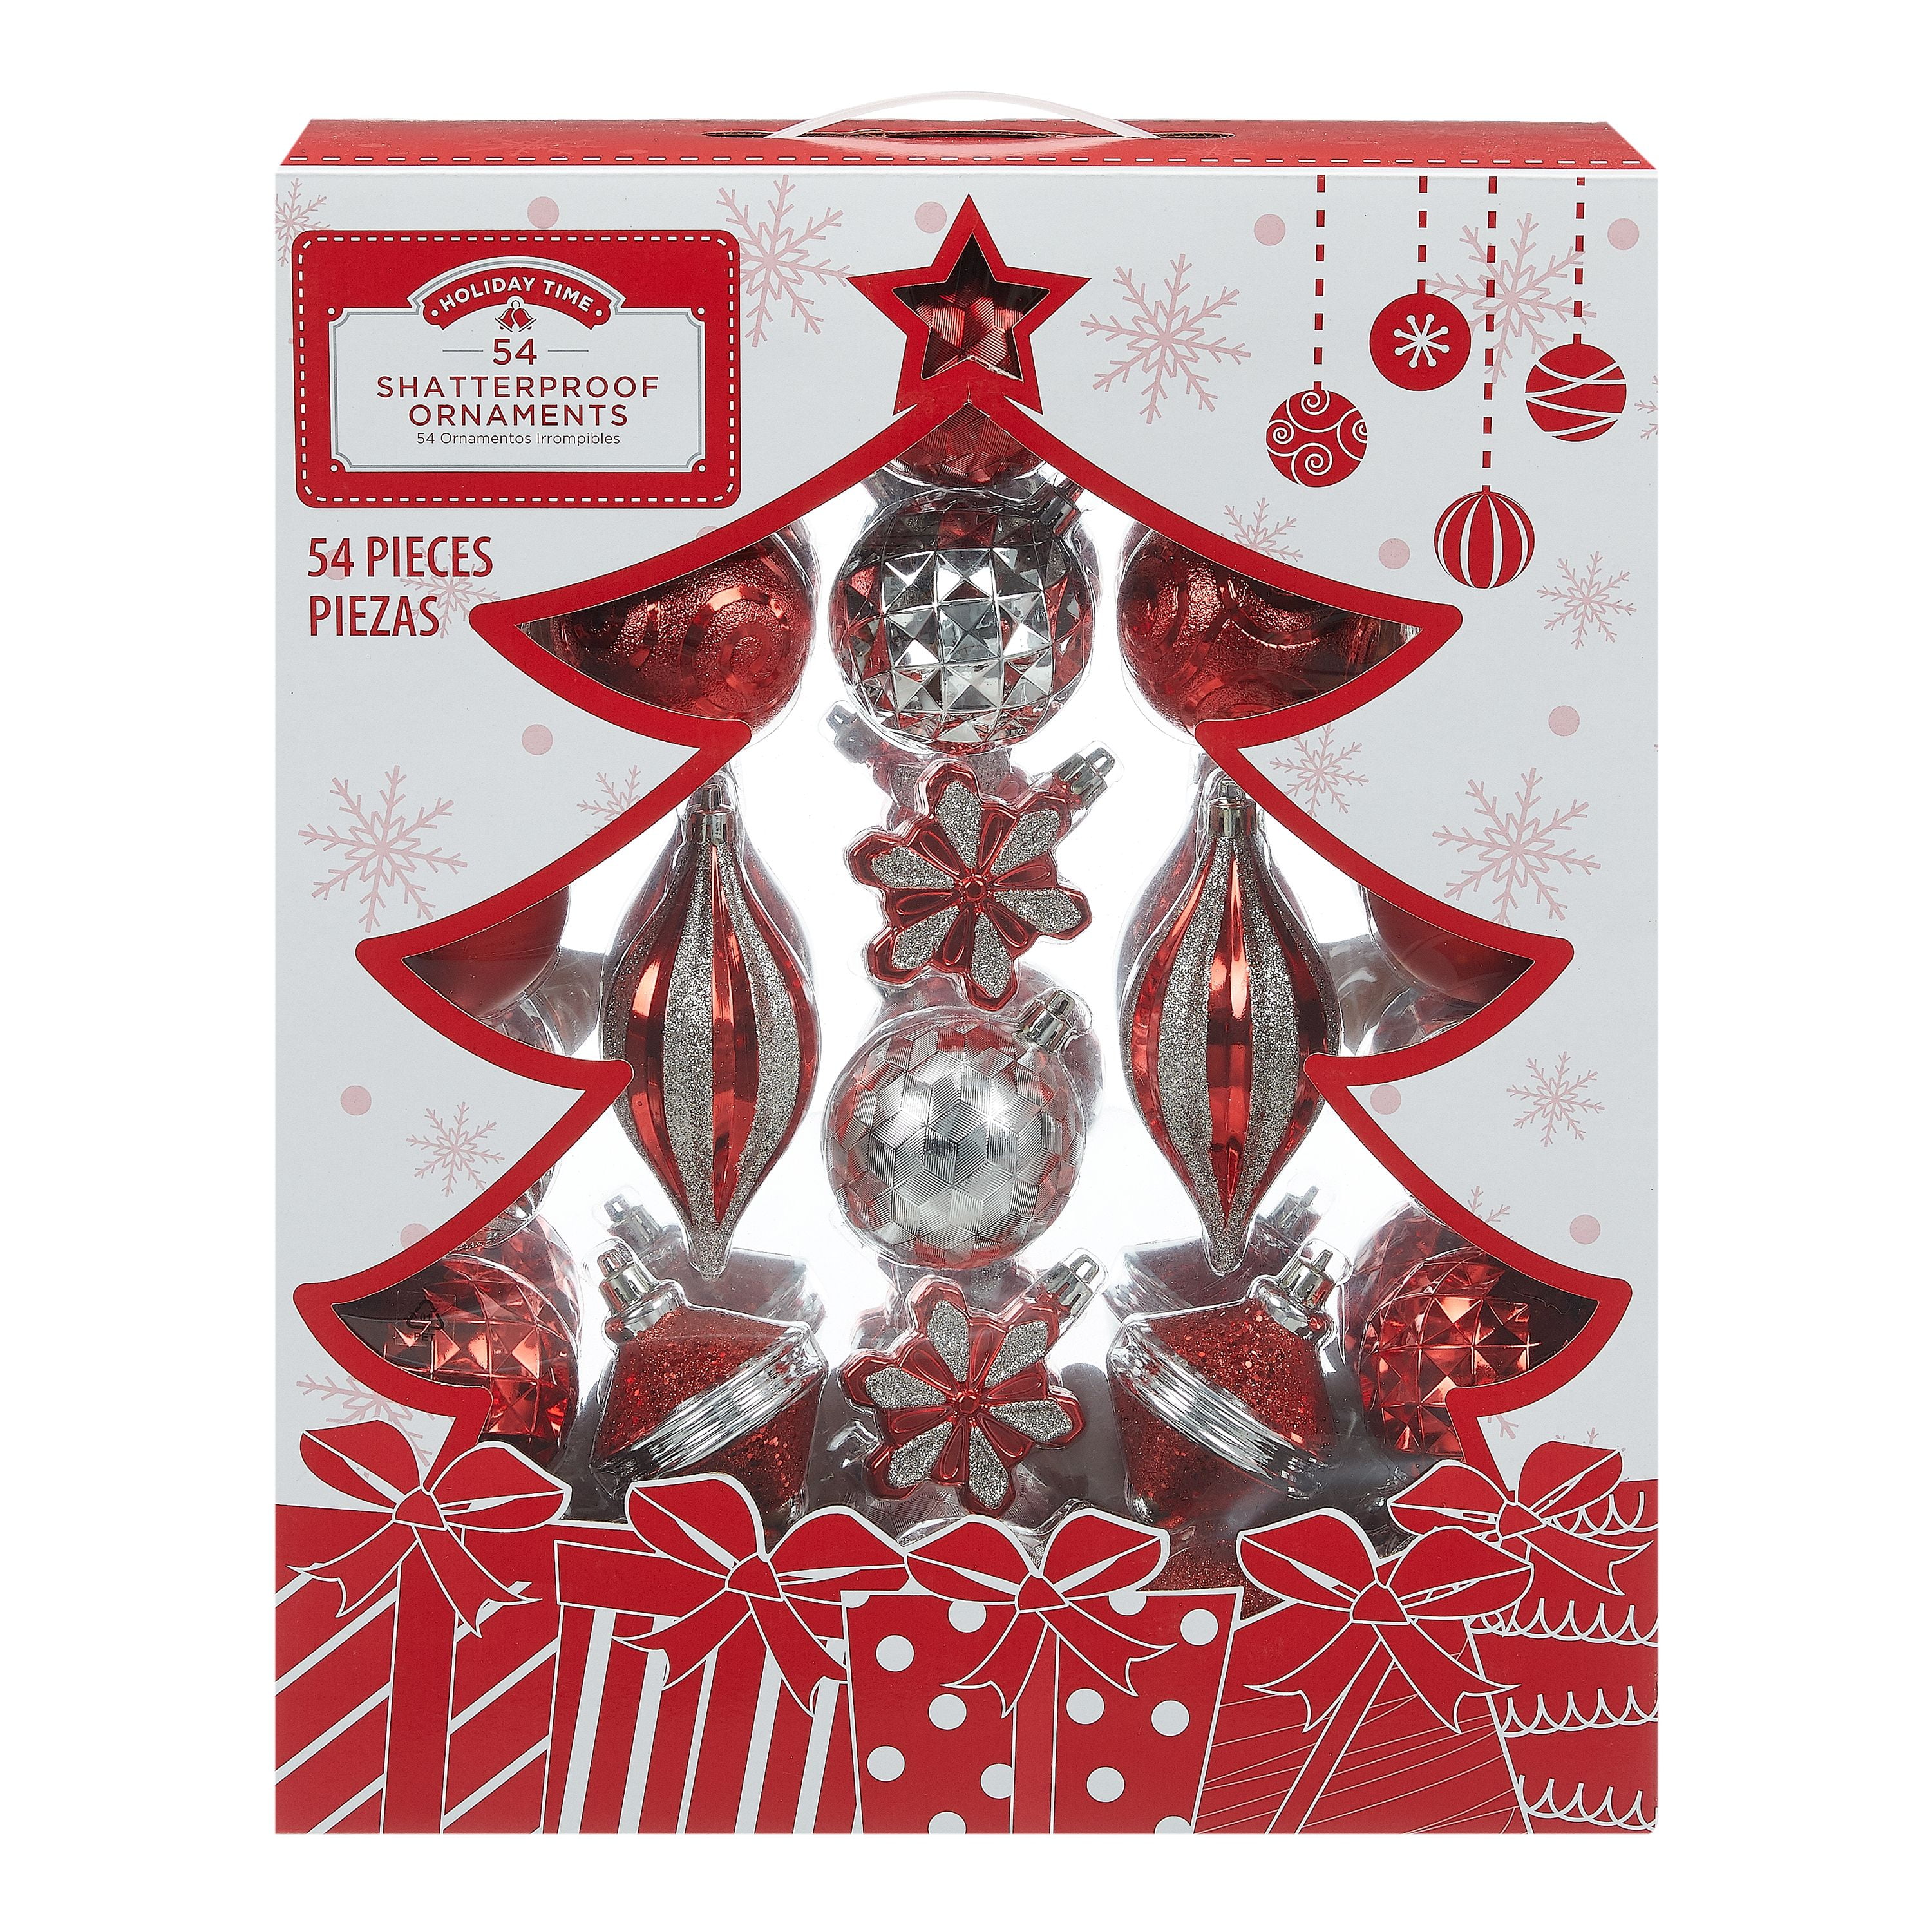 Ornaments Shatterproof Walmart Holiday Silver.